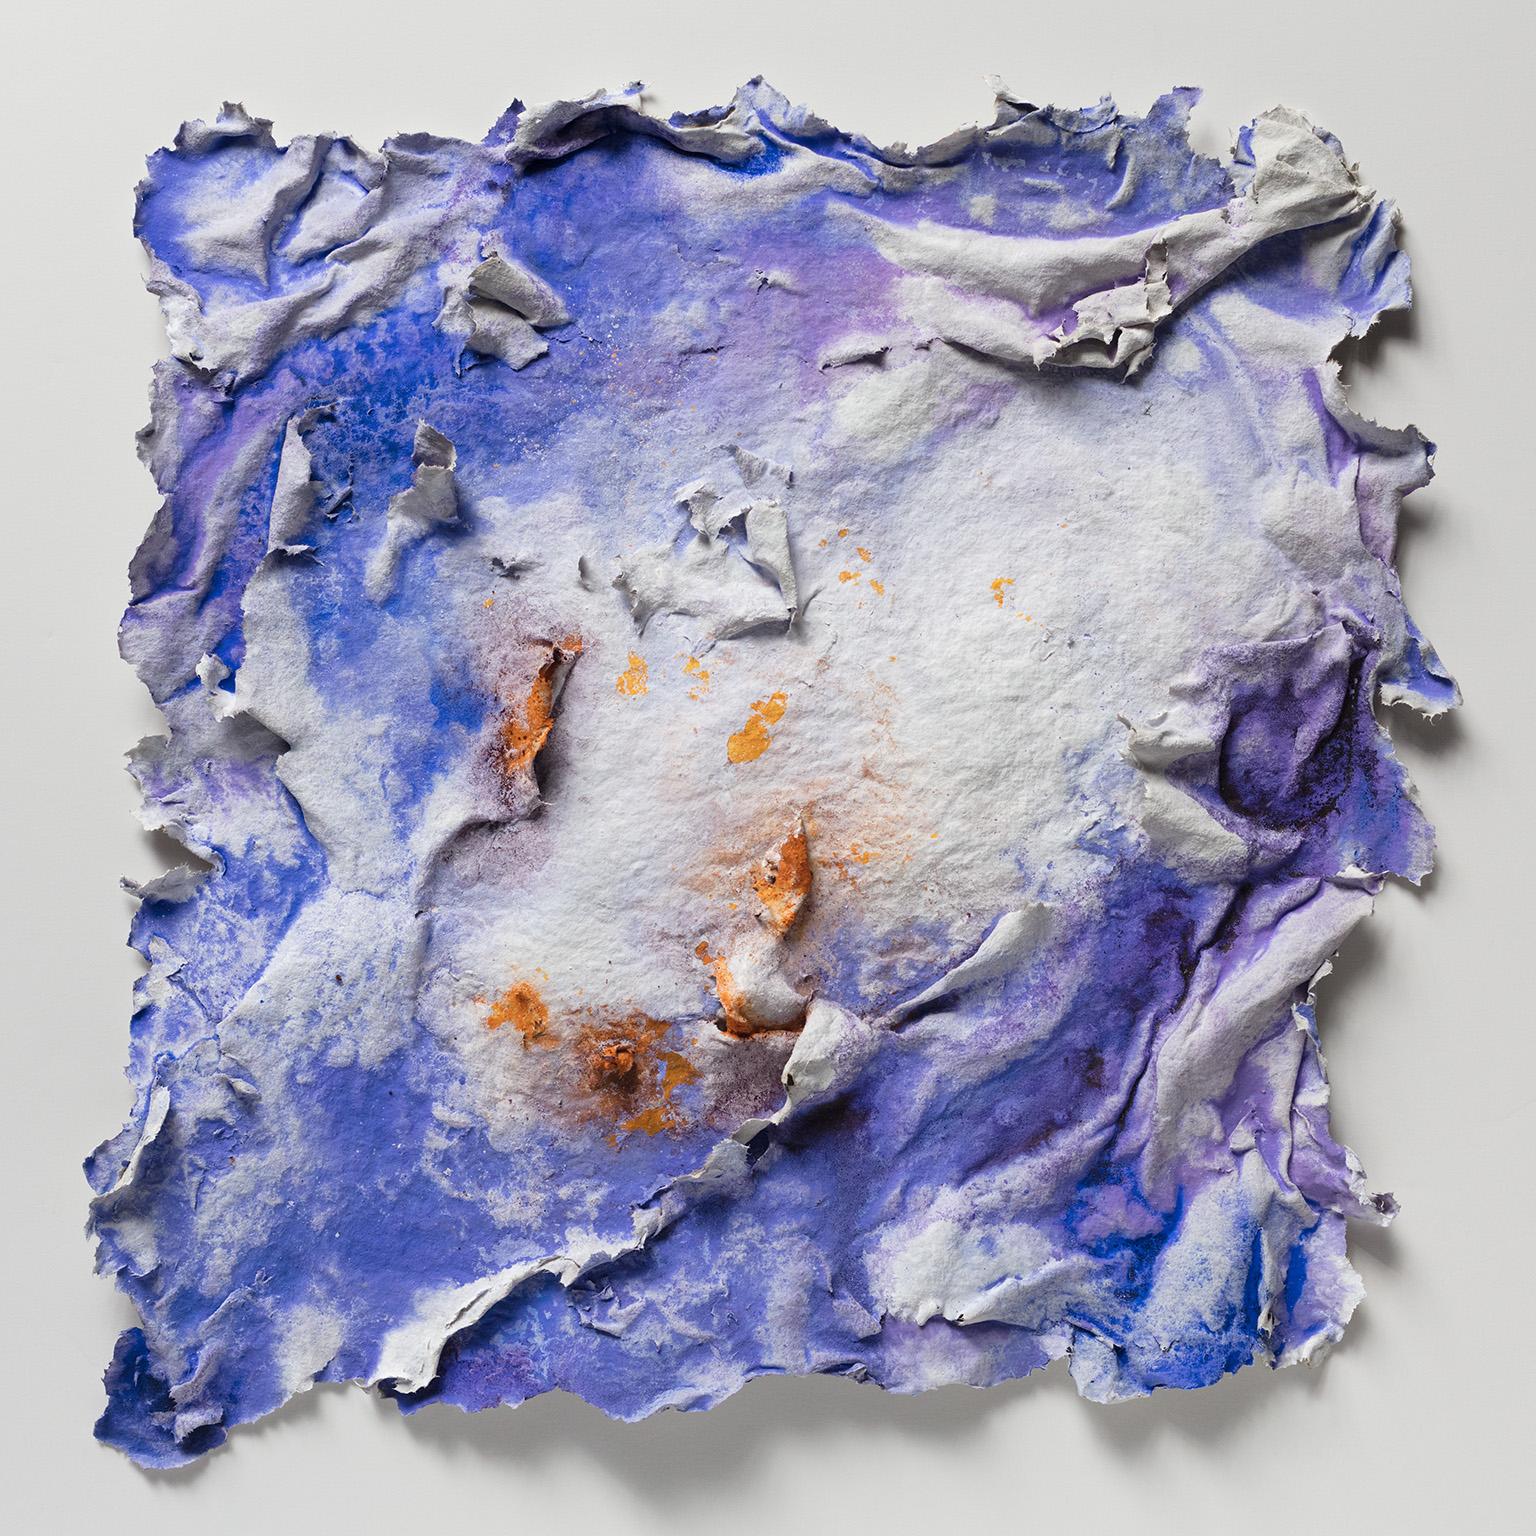 Ruggero Vanni Abstract Drawing - Lumina Brumalis (Winter Lights) - Abstract Blue and Orange Work on Cast Paper